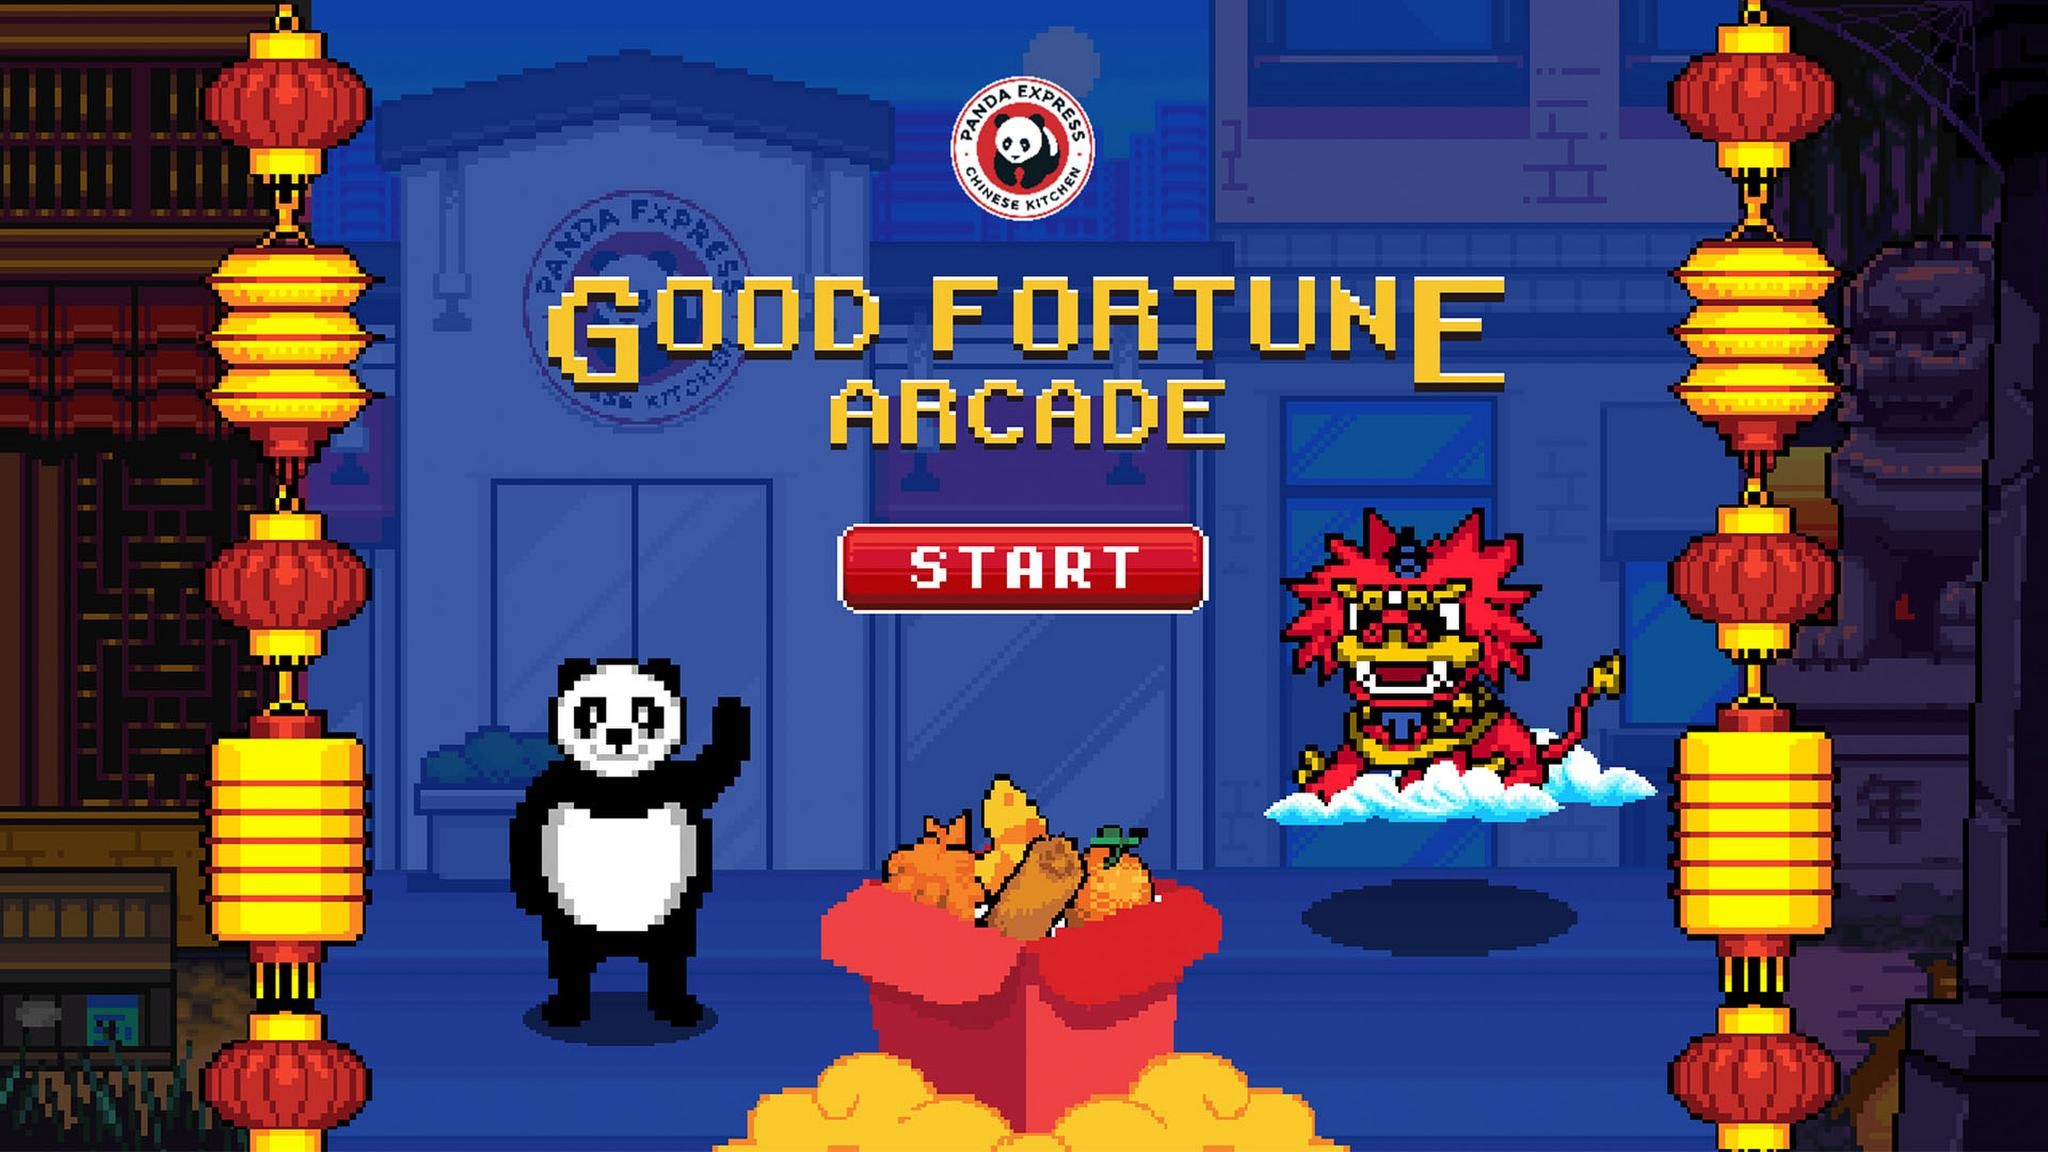 Good Fortune Arcade